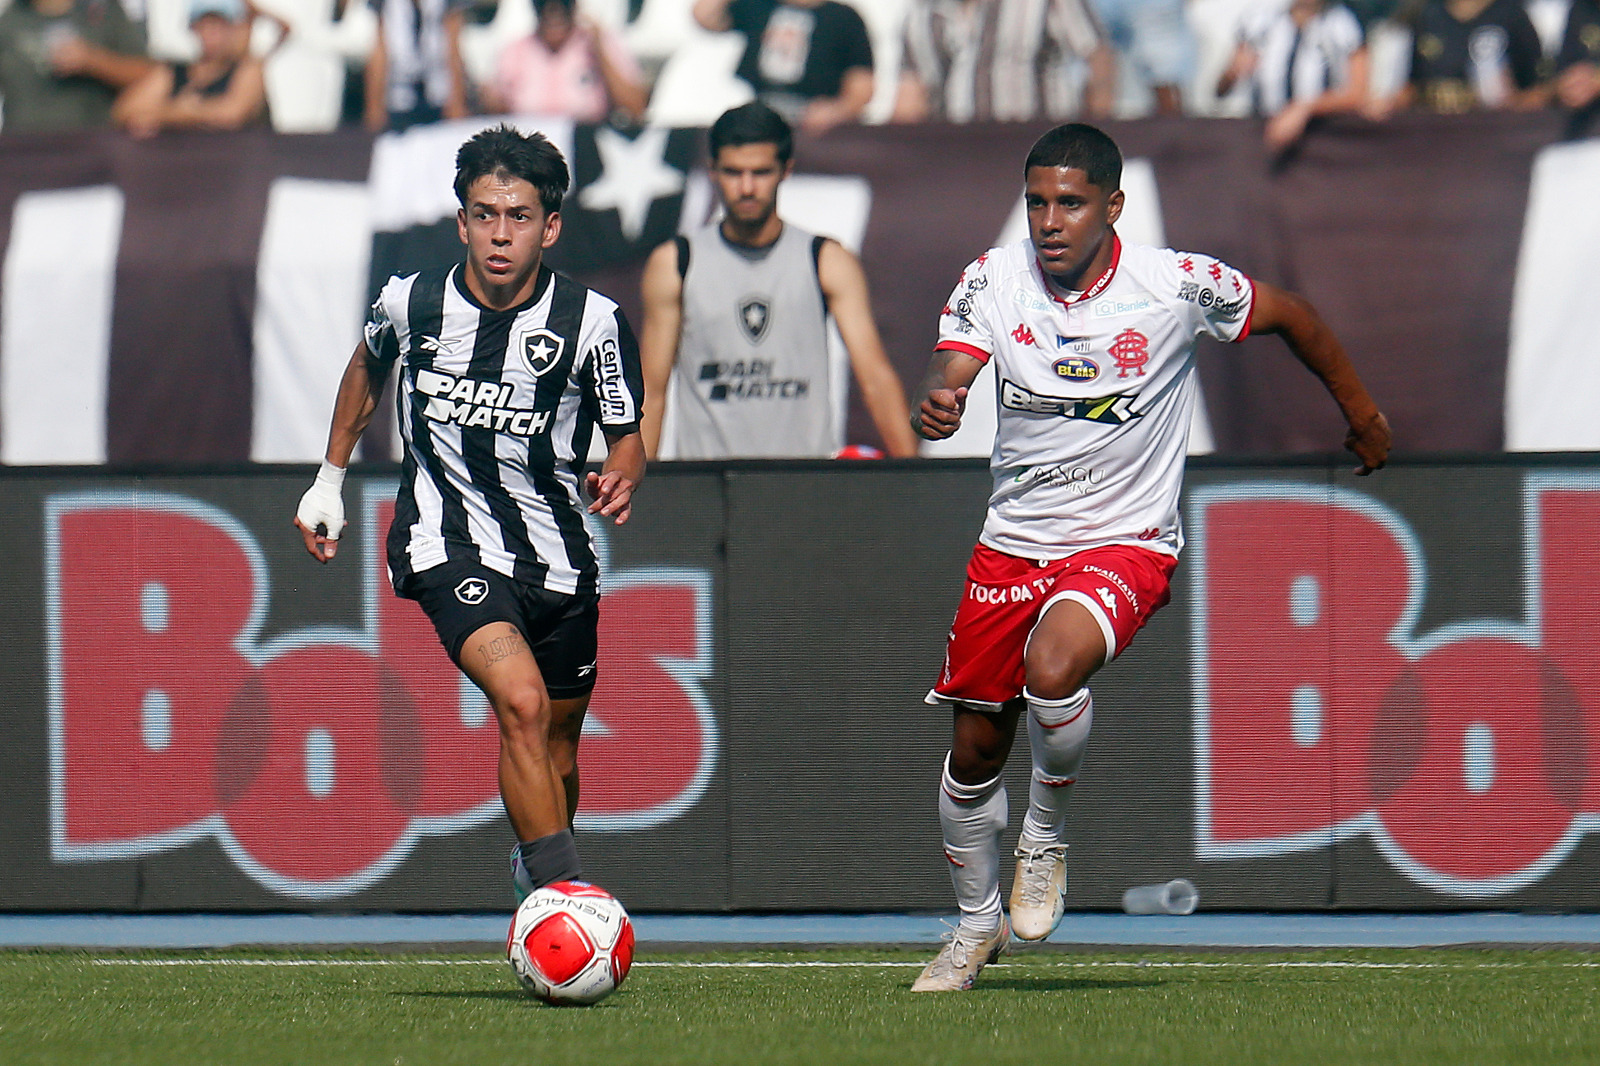 Foto: Vítor Silva | Botafogo